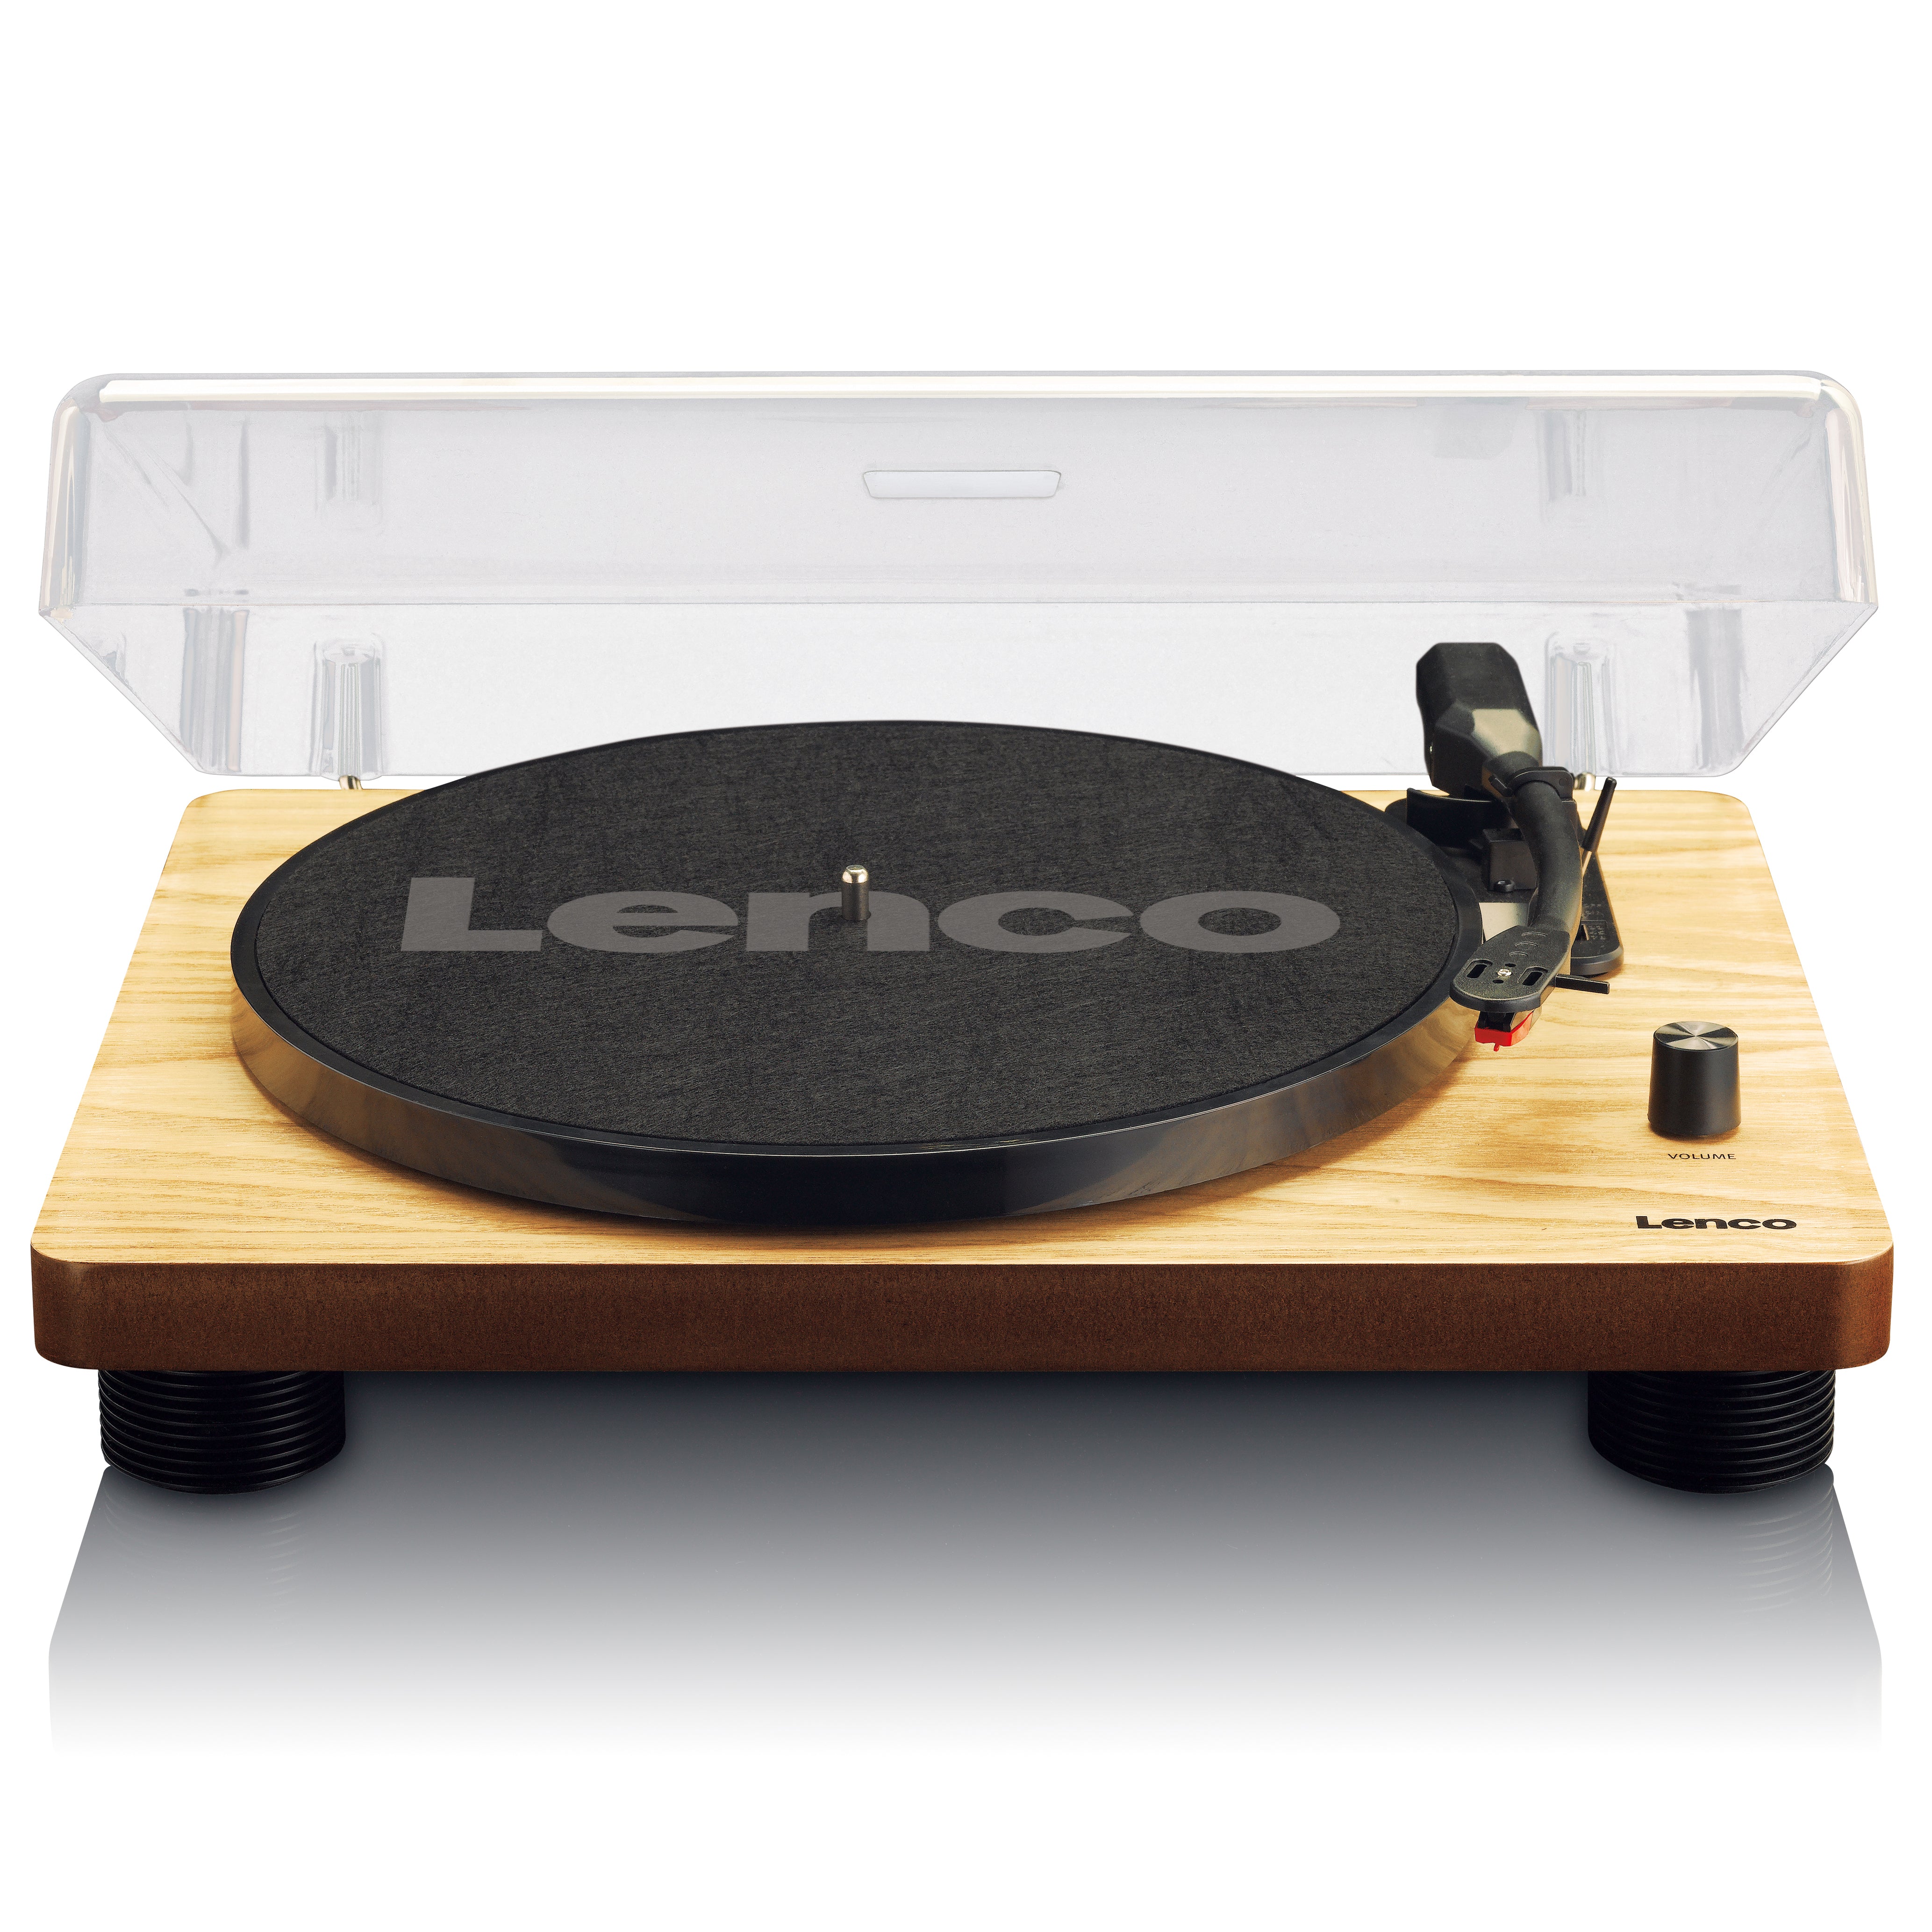 Lenco LS-50 kaufen? Lenco Lenco.de Webshop offiziellen – Offizieller - Jetzt | Webshop im